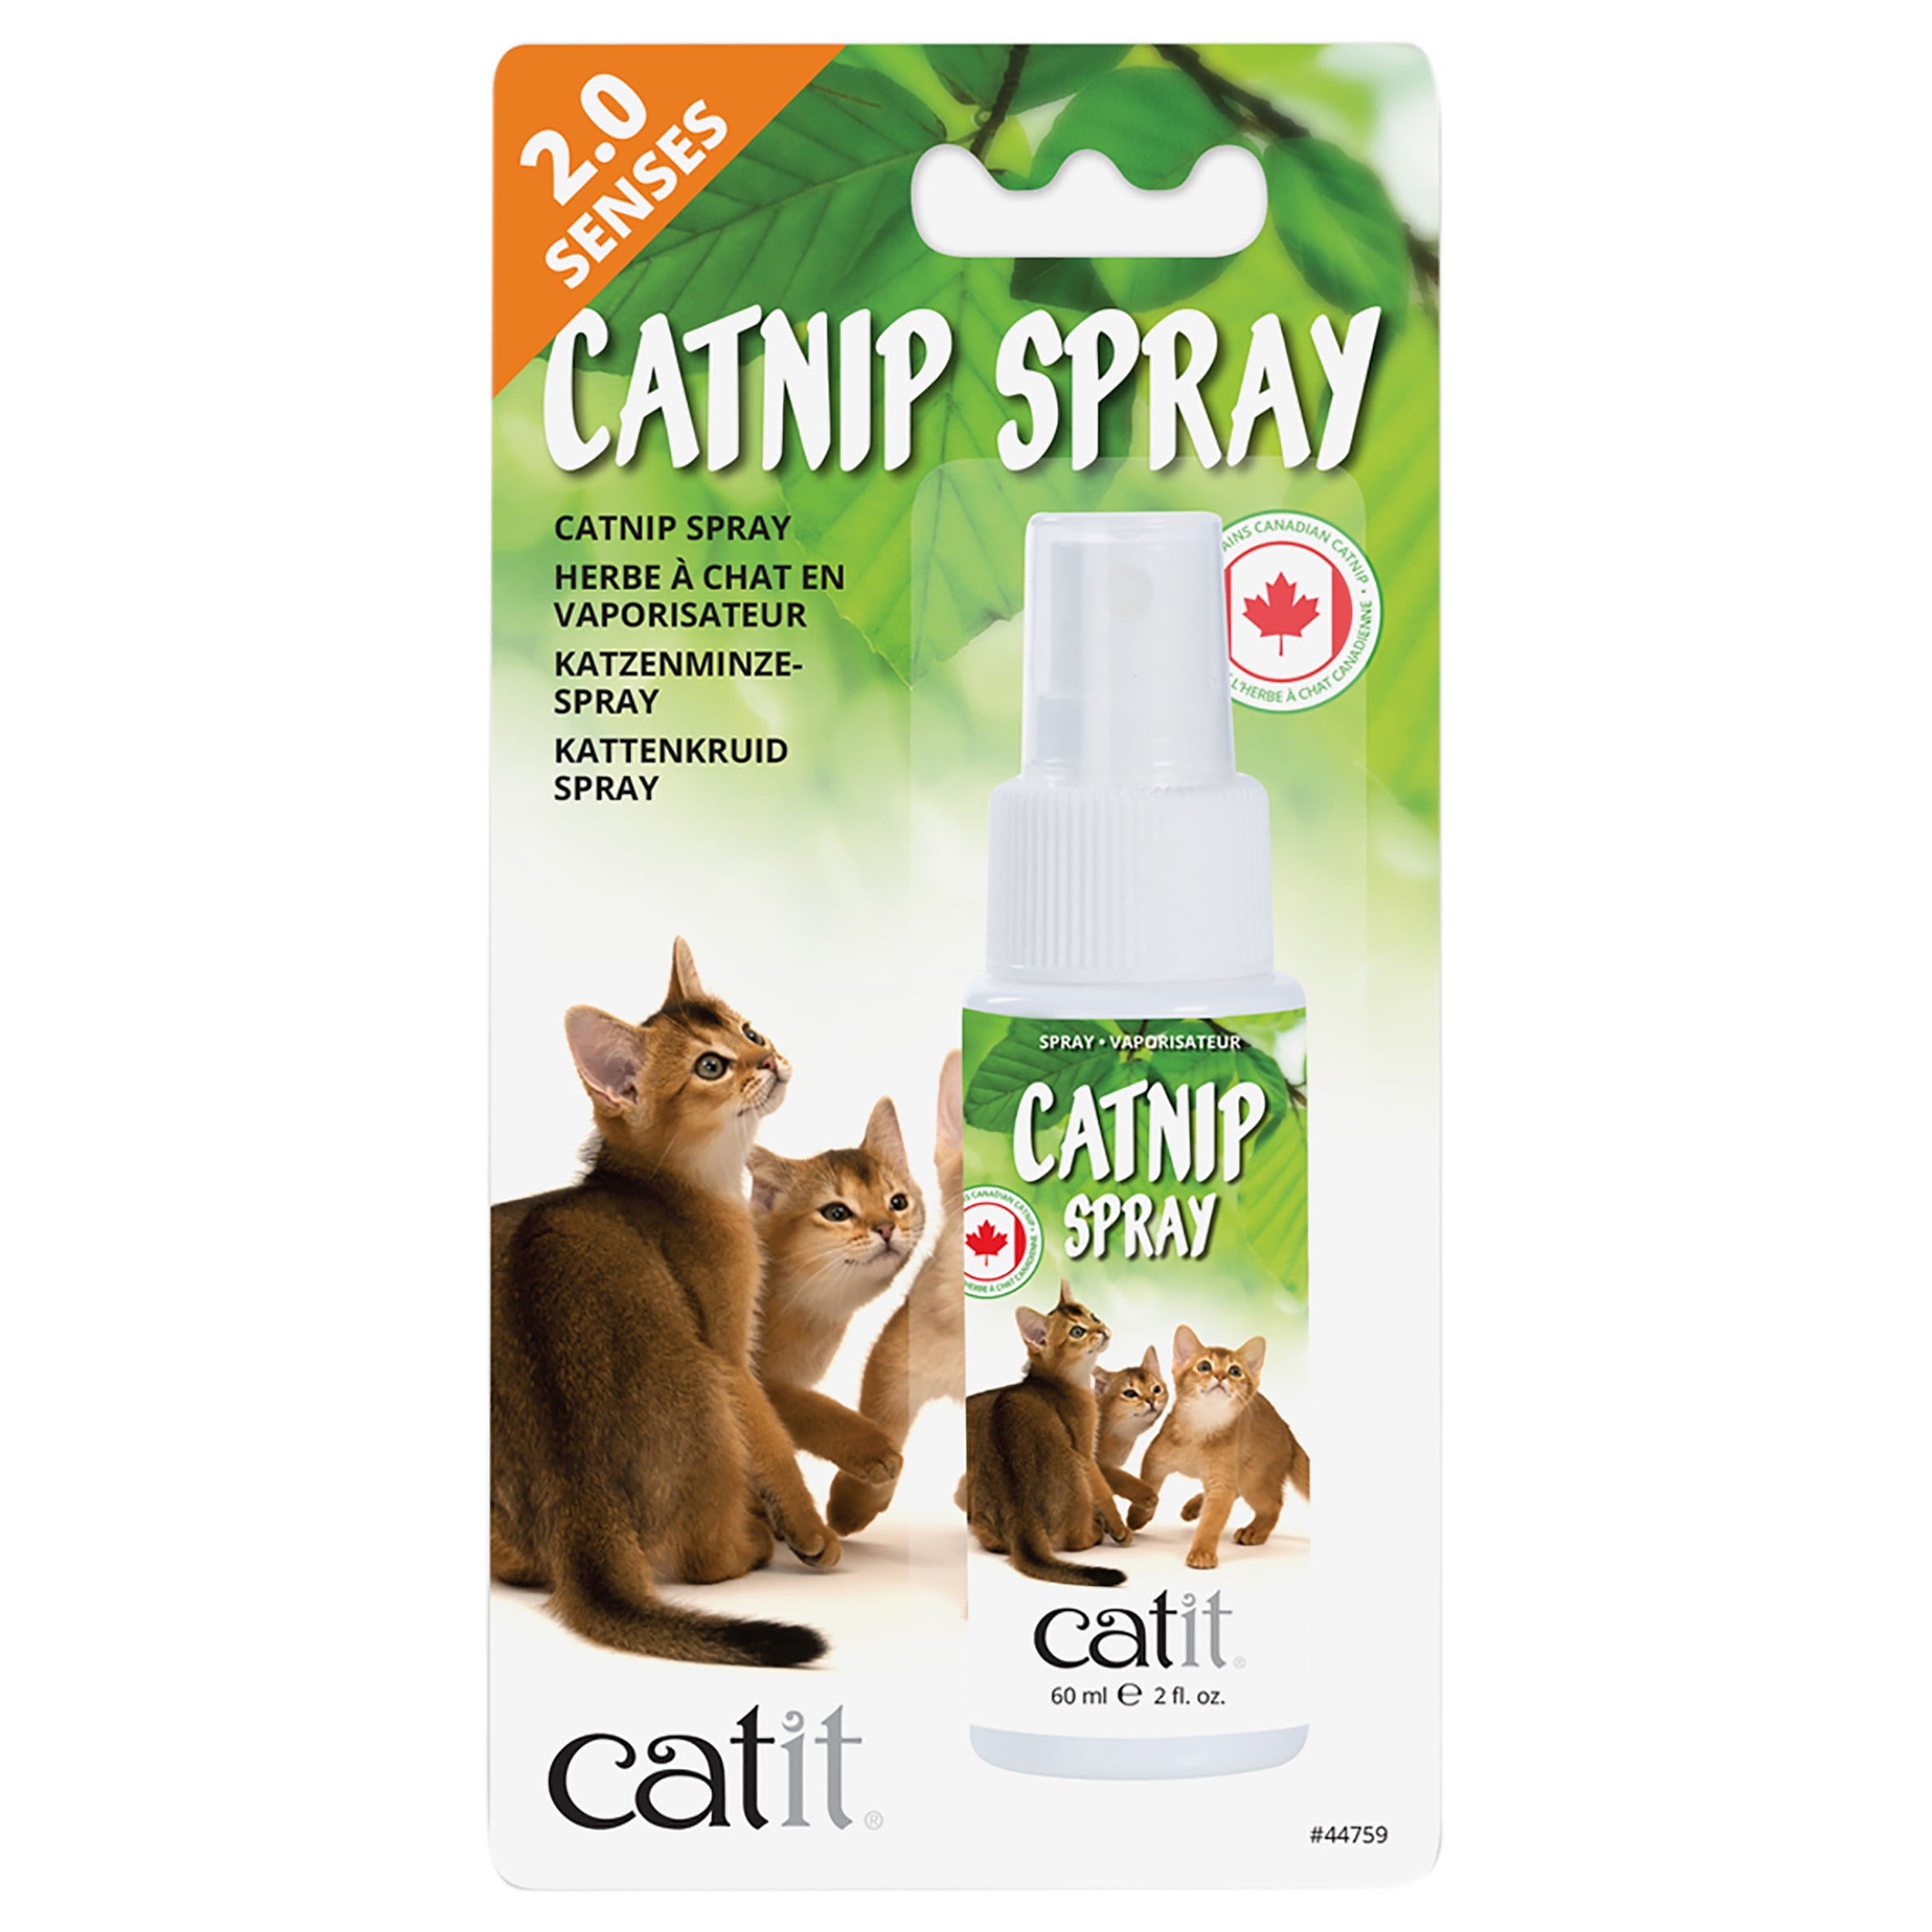 Gororong Premium Catnip Spray 4fl oz for Indoor, Outdoor Cats and Kitt